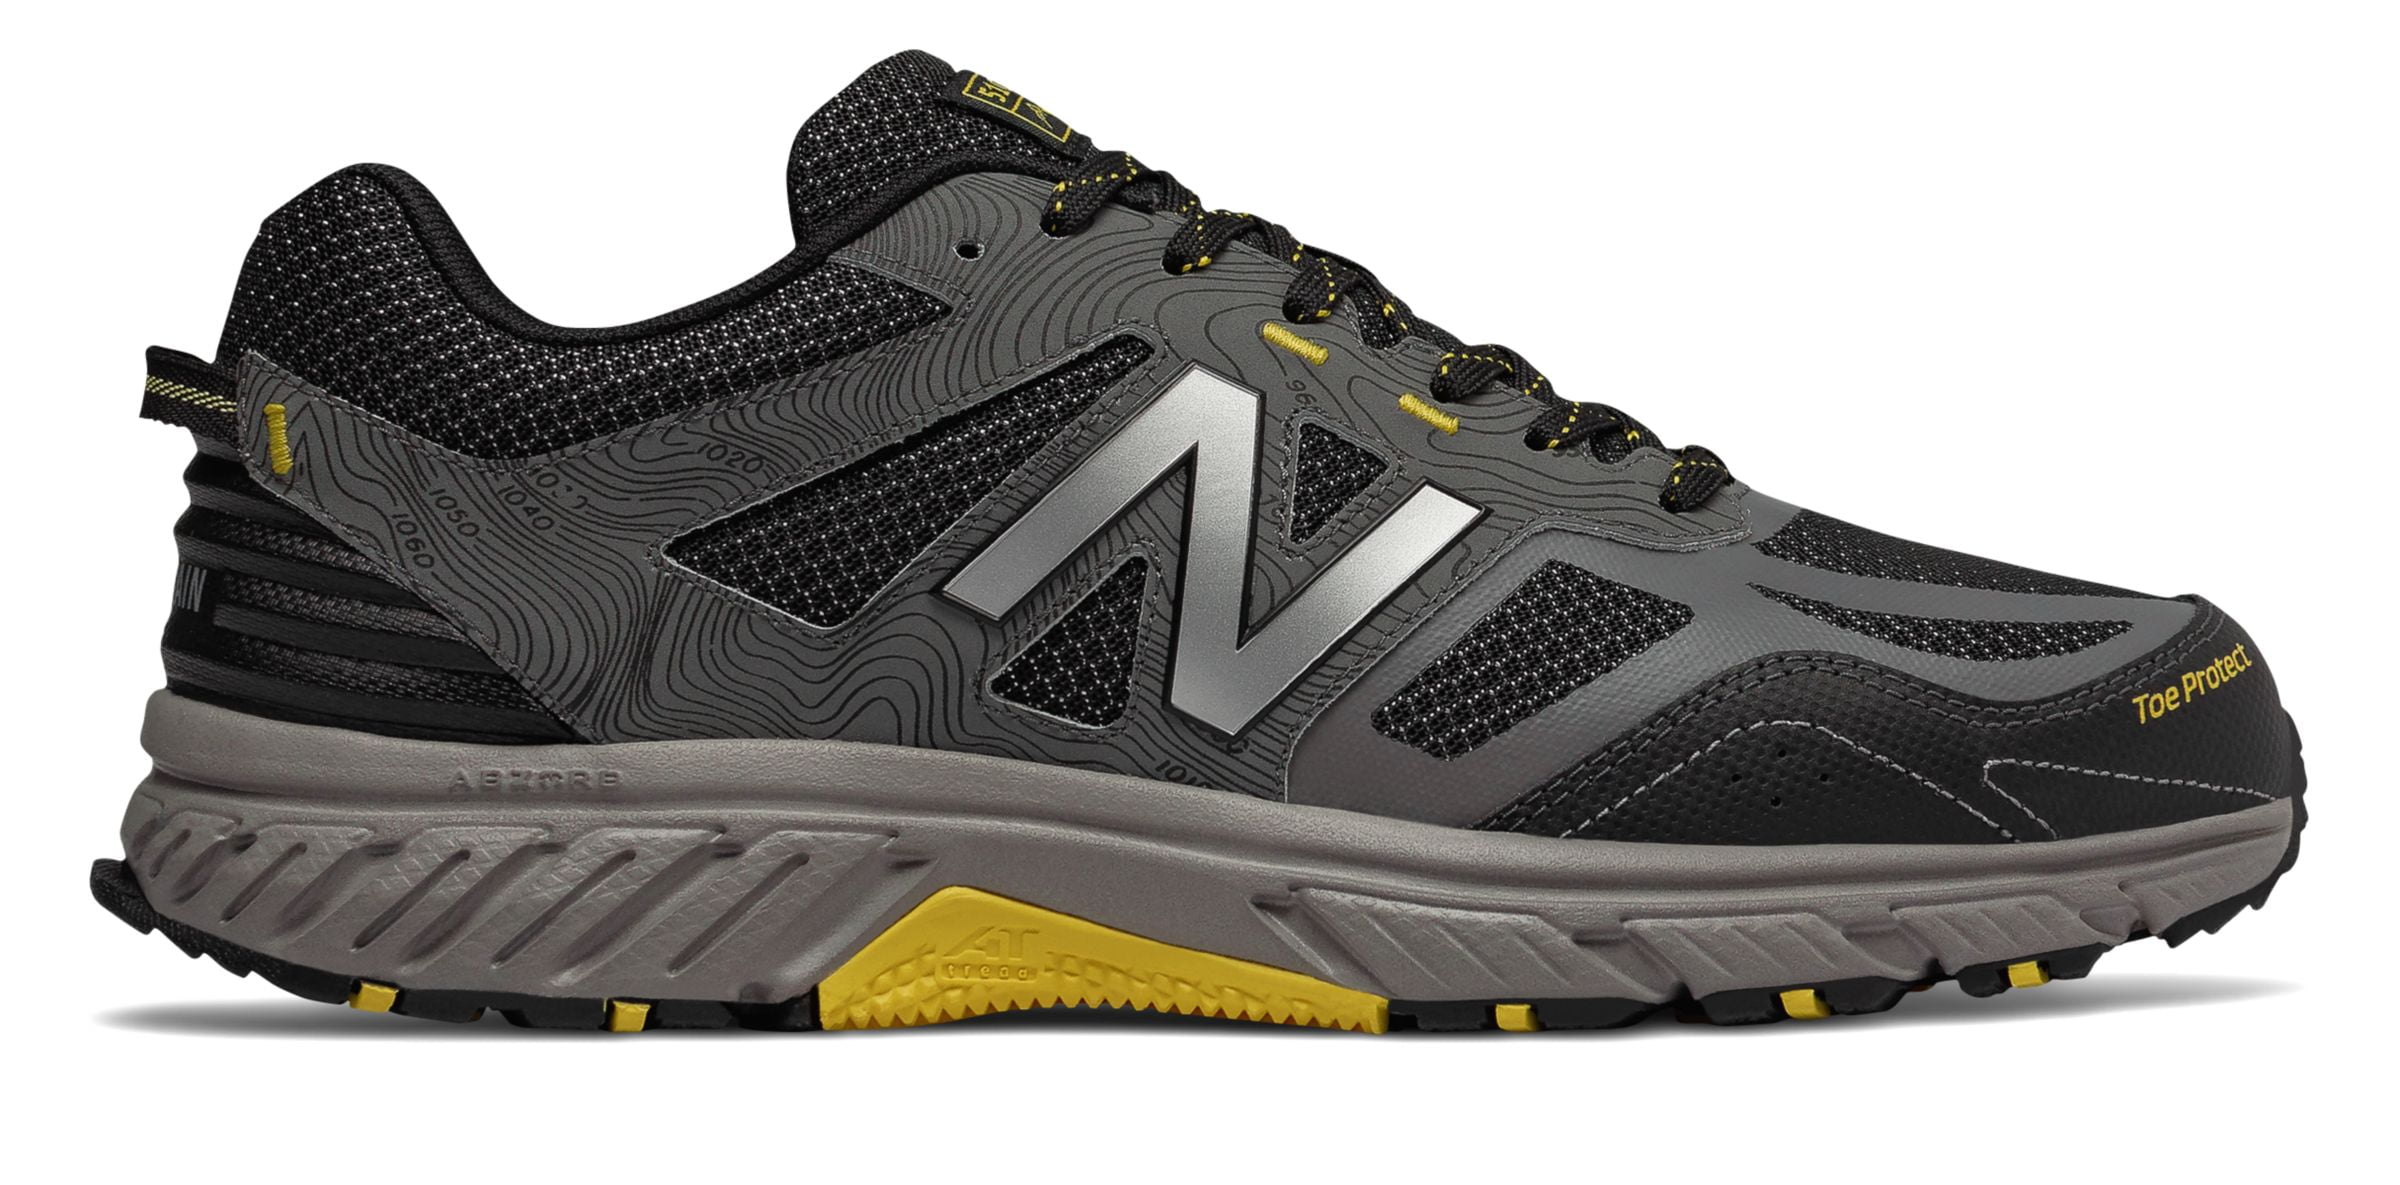 New Balance Men's 510v4 Trail Shoes Grey with Black - Walmart.com